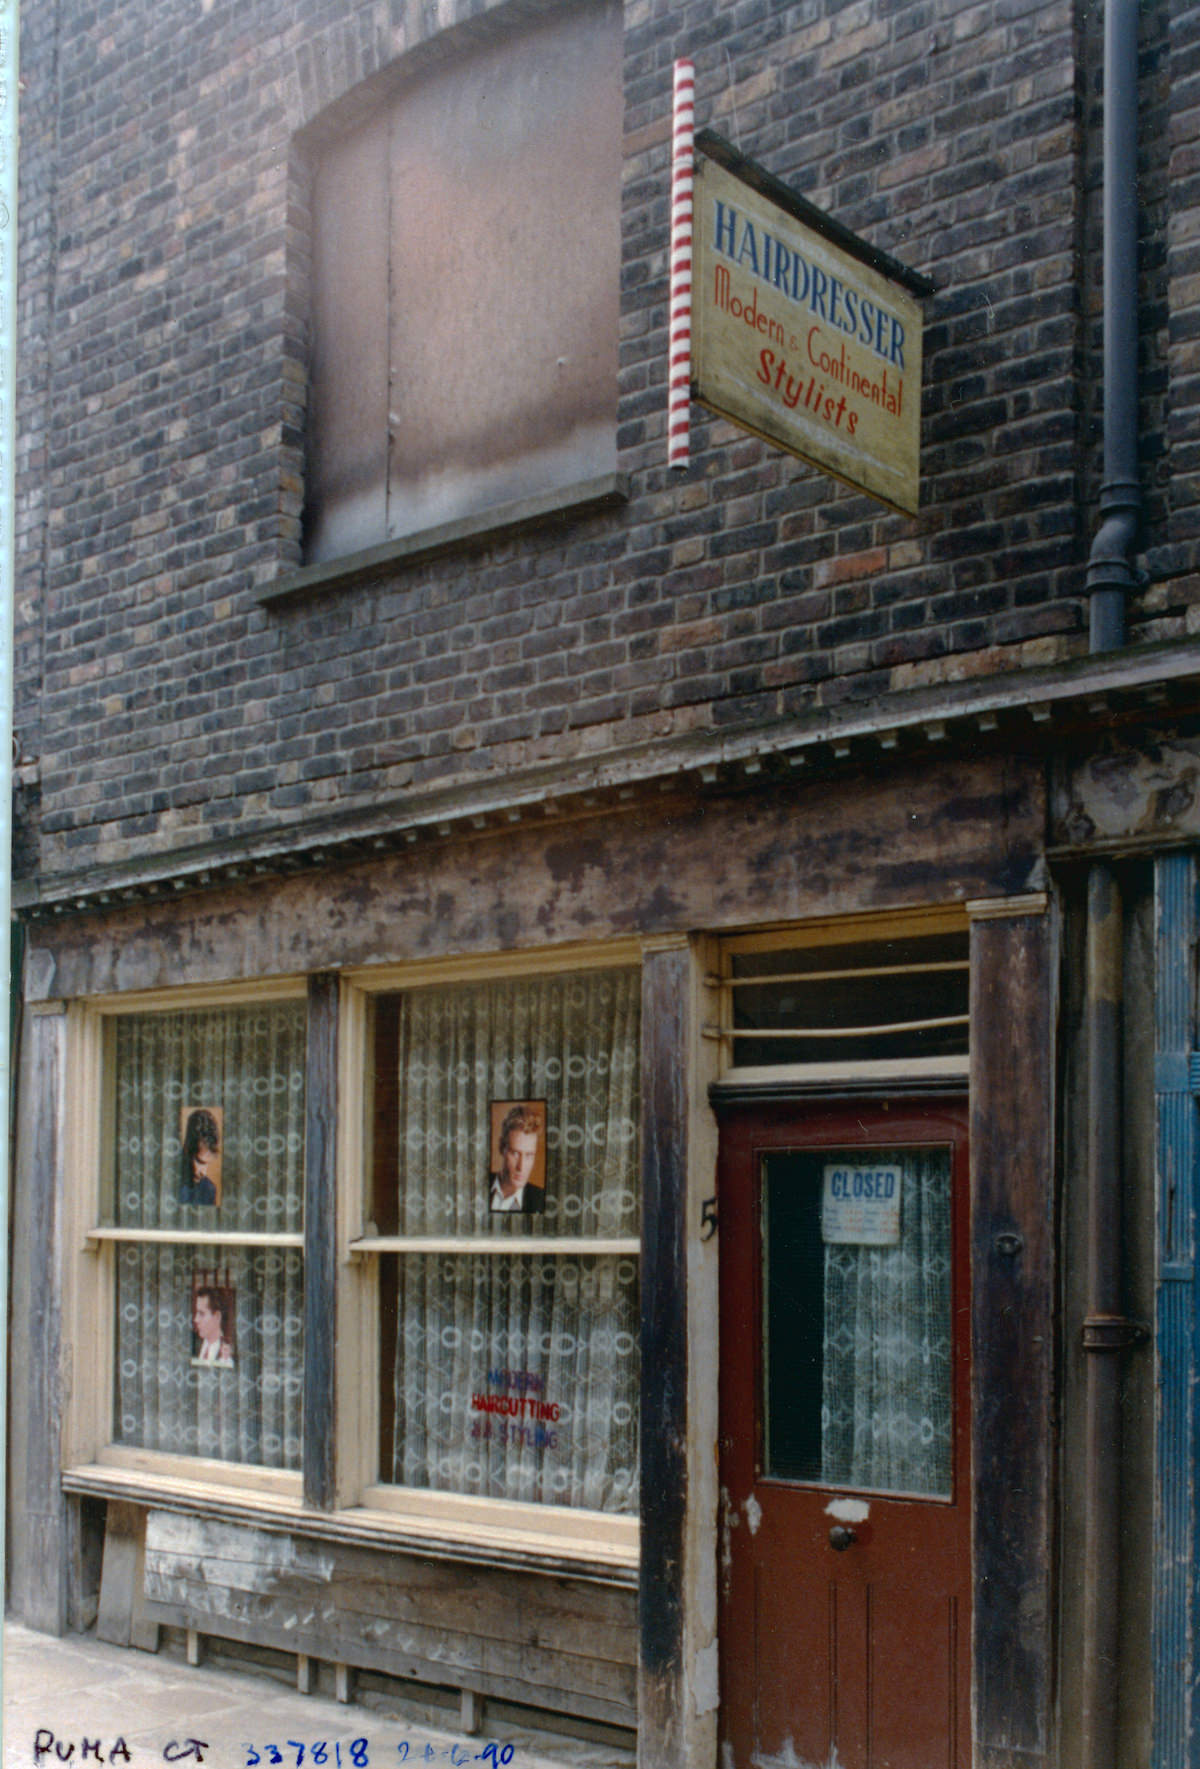 Hairdressers, Puma Court, Spitalfields, Tower Hamlets, 1990